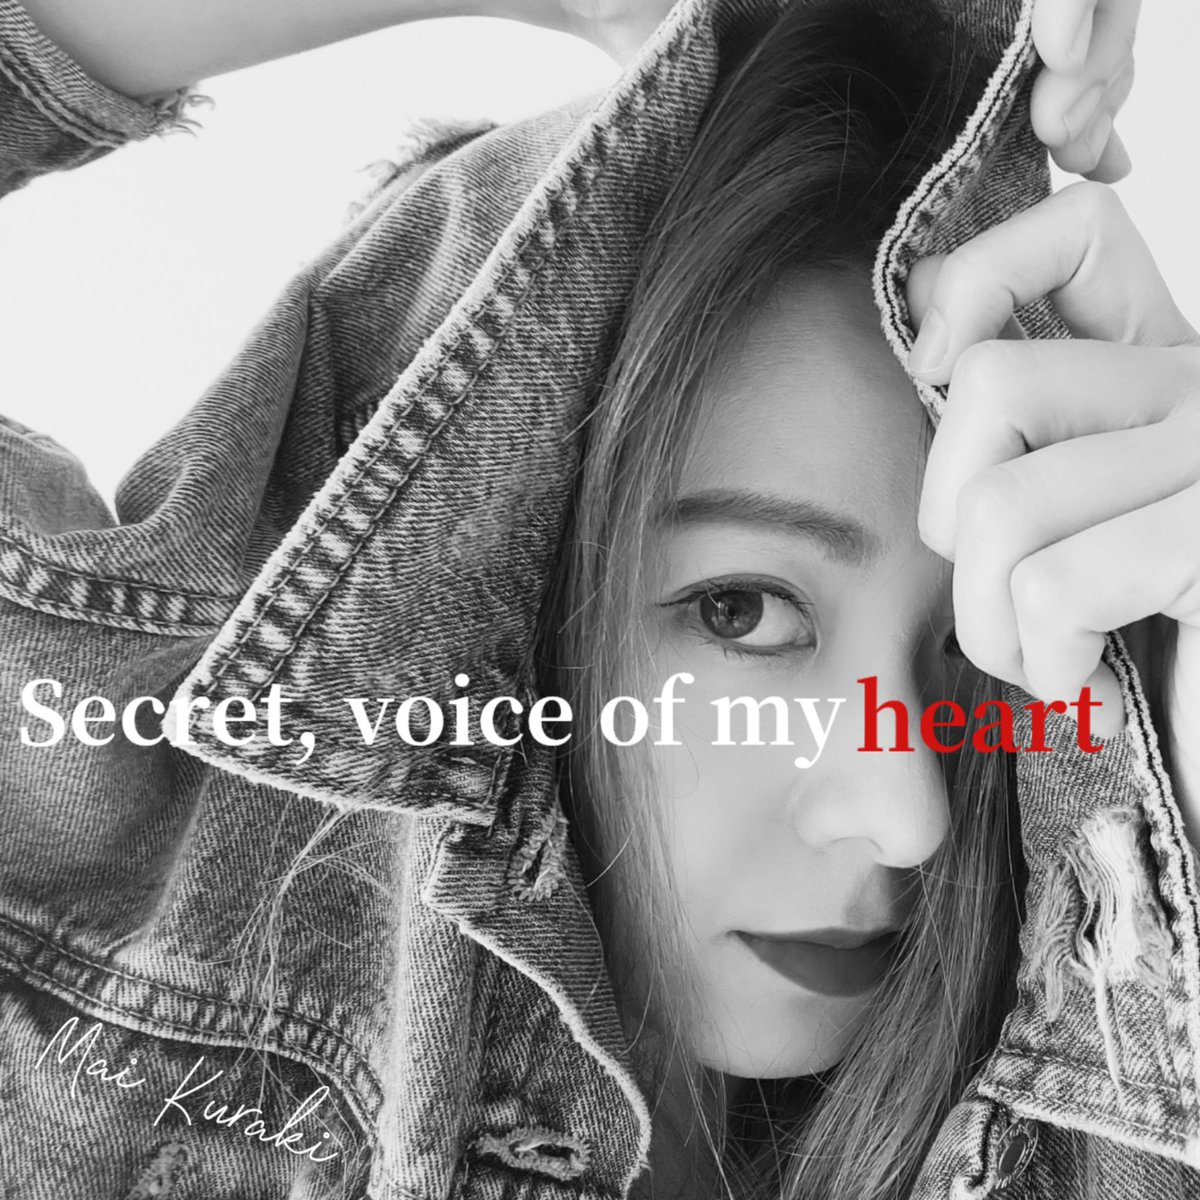 Cover art for『Mai Kuraki - Secret, voice of my heart』from the release『Secret, voice of my heart